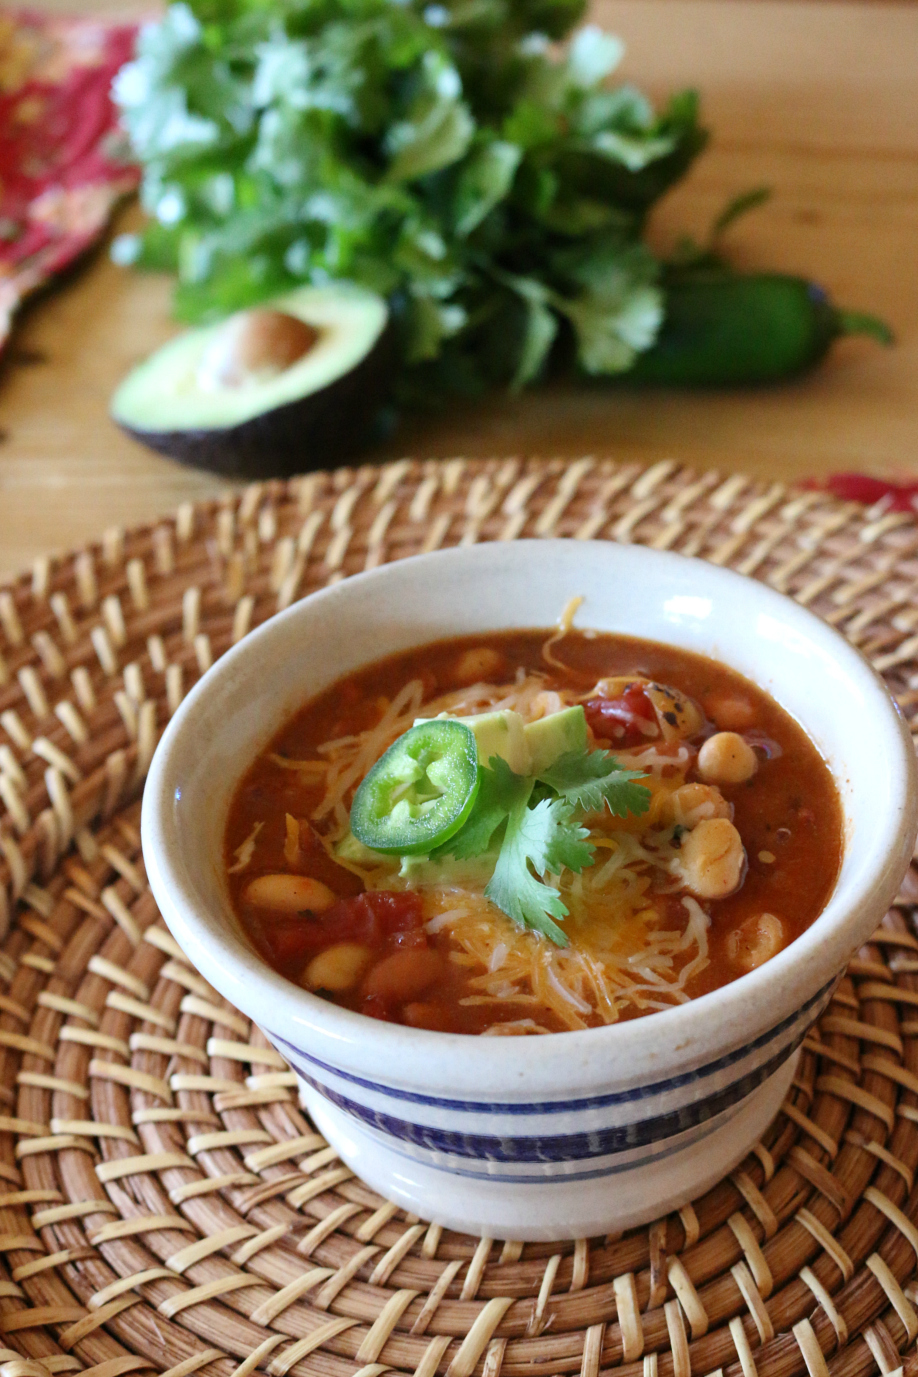 Three Bean Chili Recipe CeceliasGoodStuff.com | Good Food for Good People 